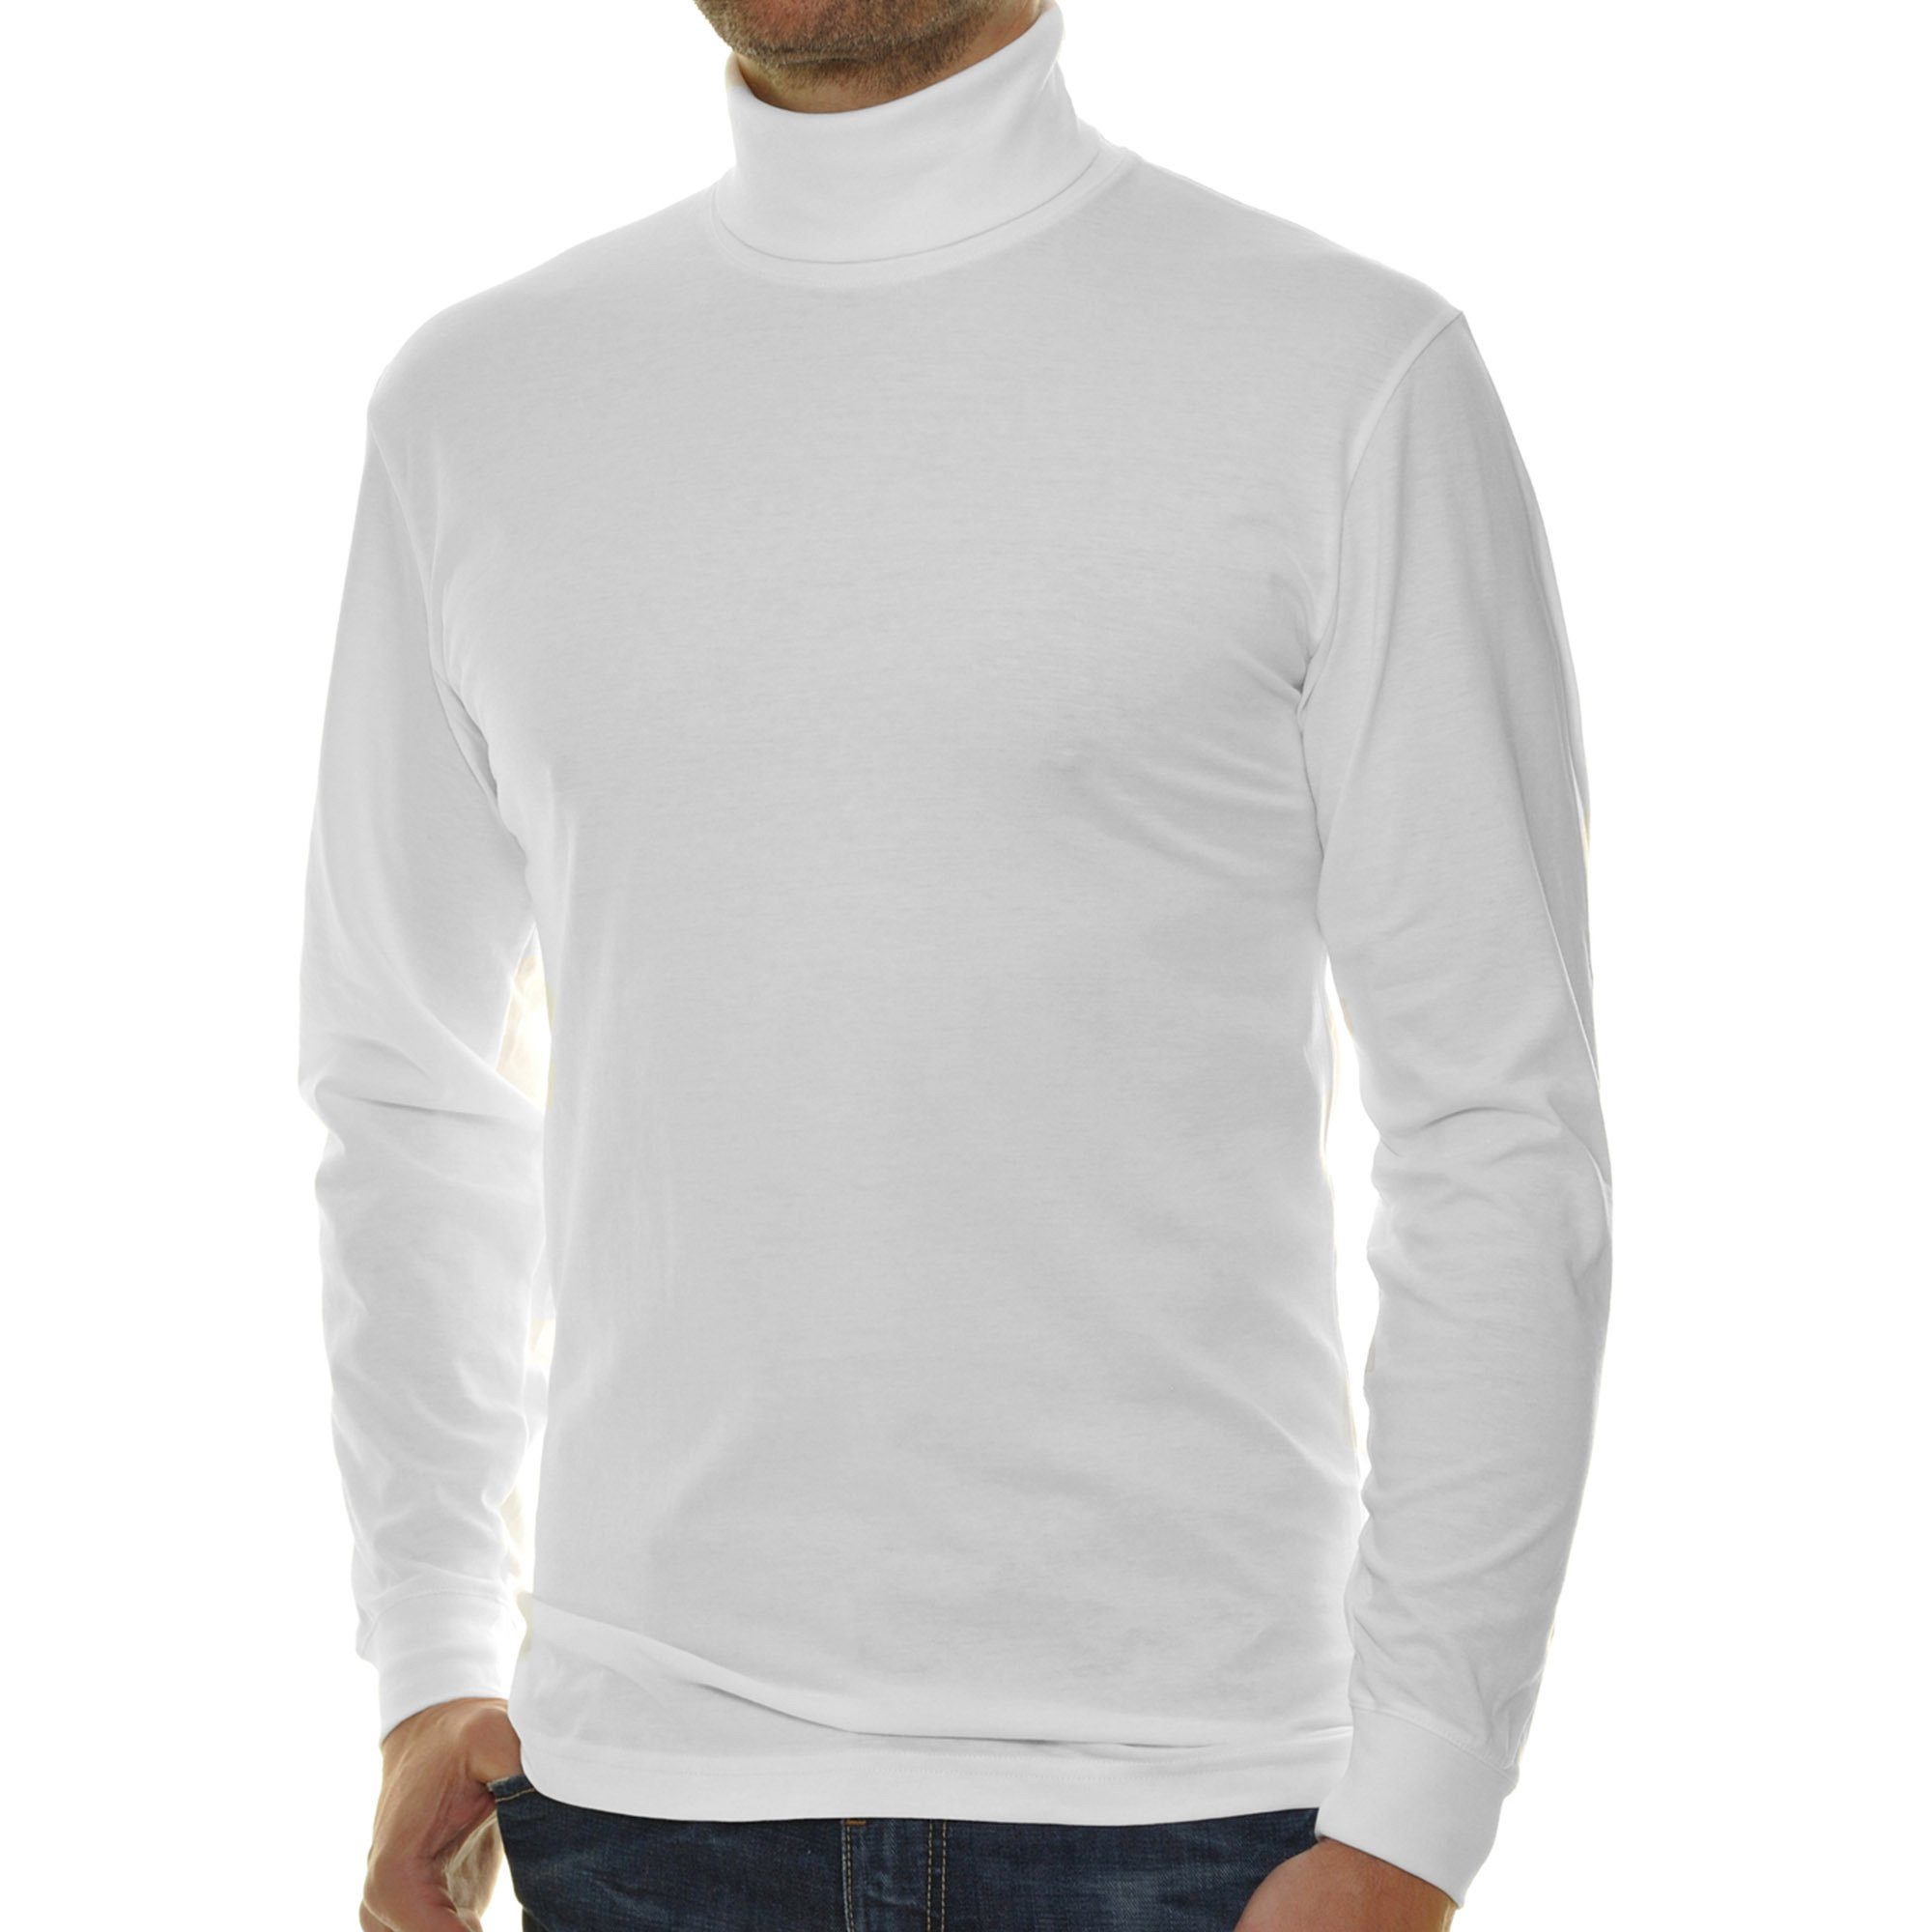 Herren Weiß - RAGMAN Basic Langarm Rollkragenpullover Sweatshirt